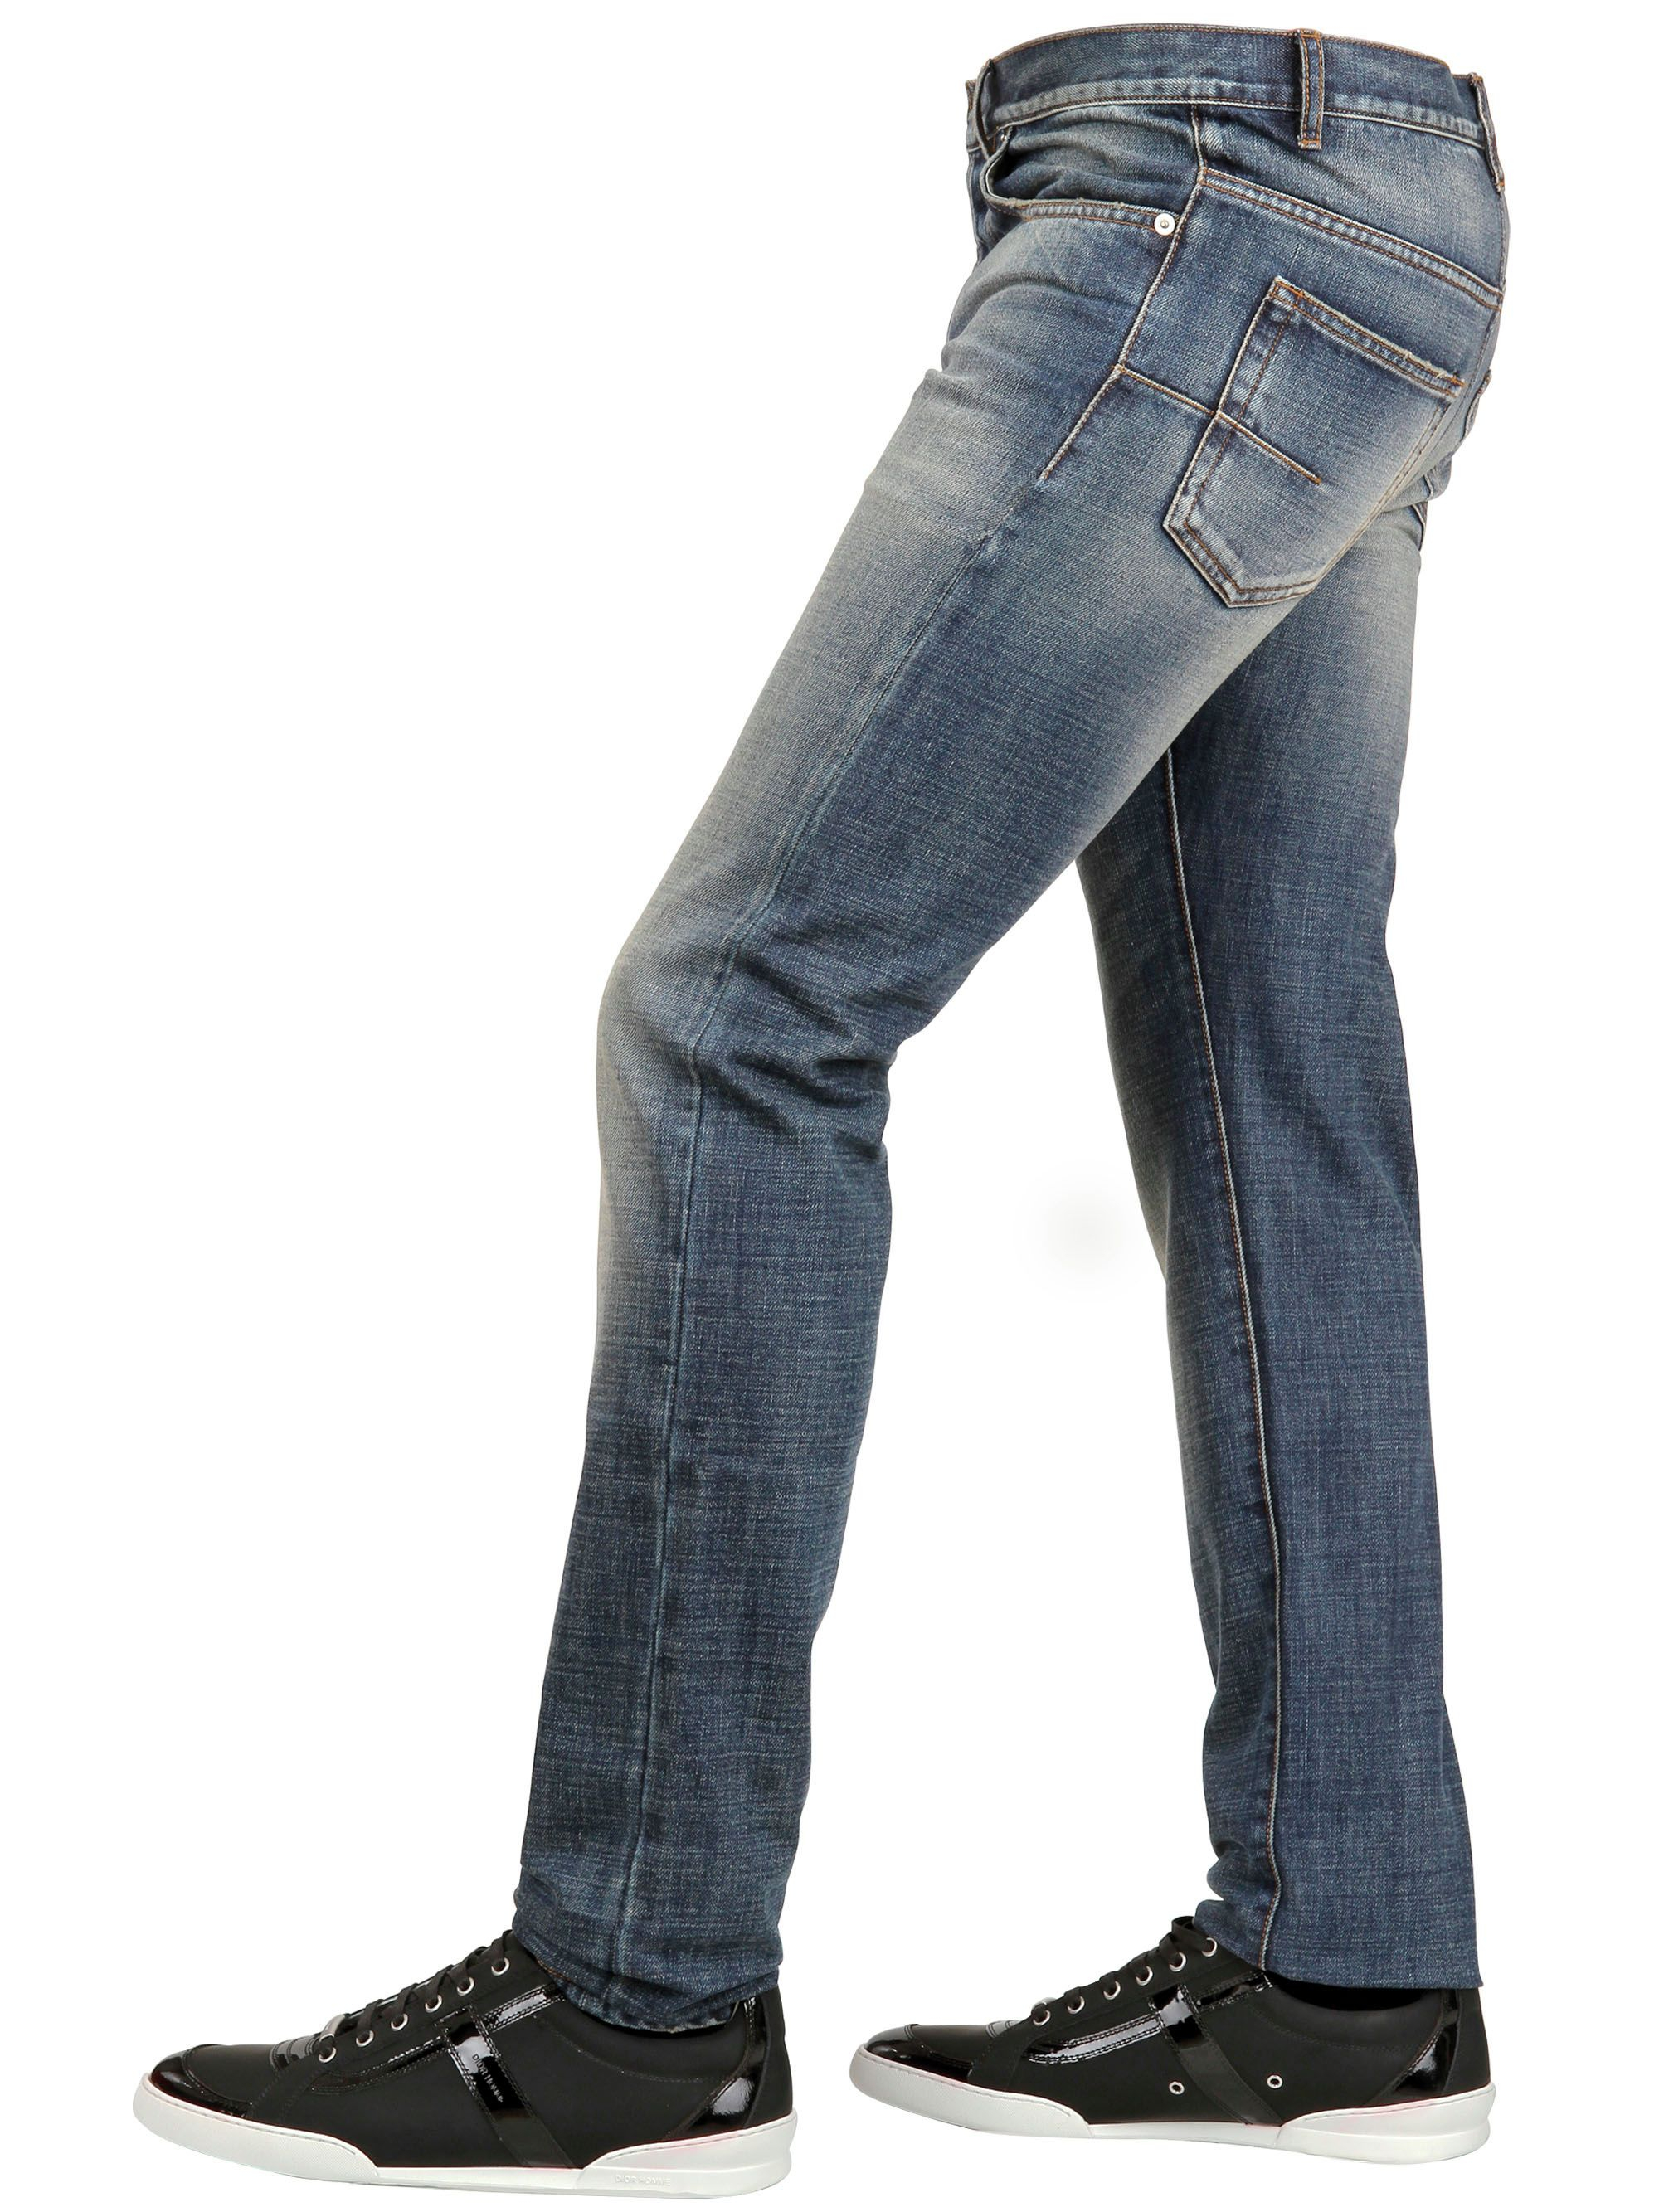 Dior Homme 19Cm Heavy Seas Denim Jeans in Blue for Men - Lyst